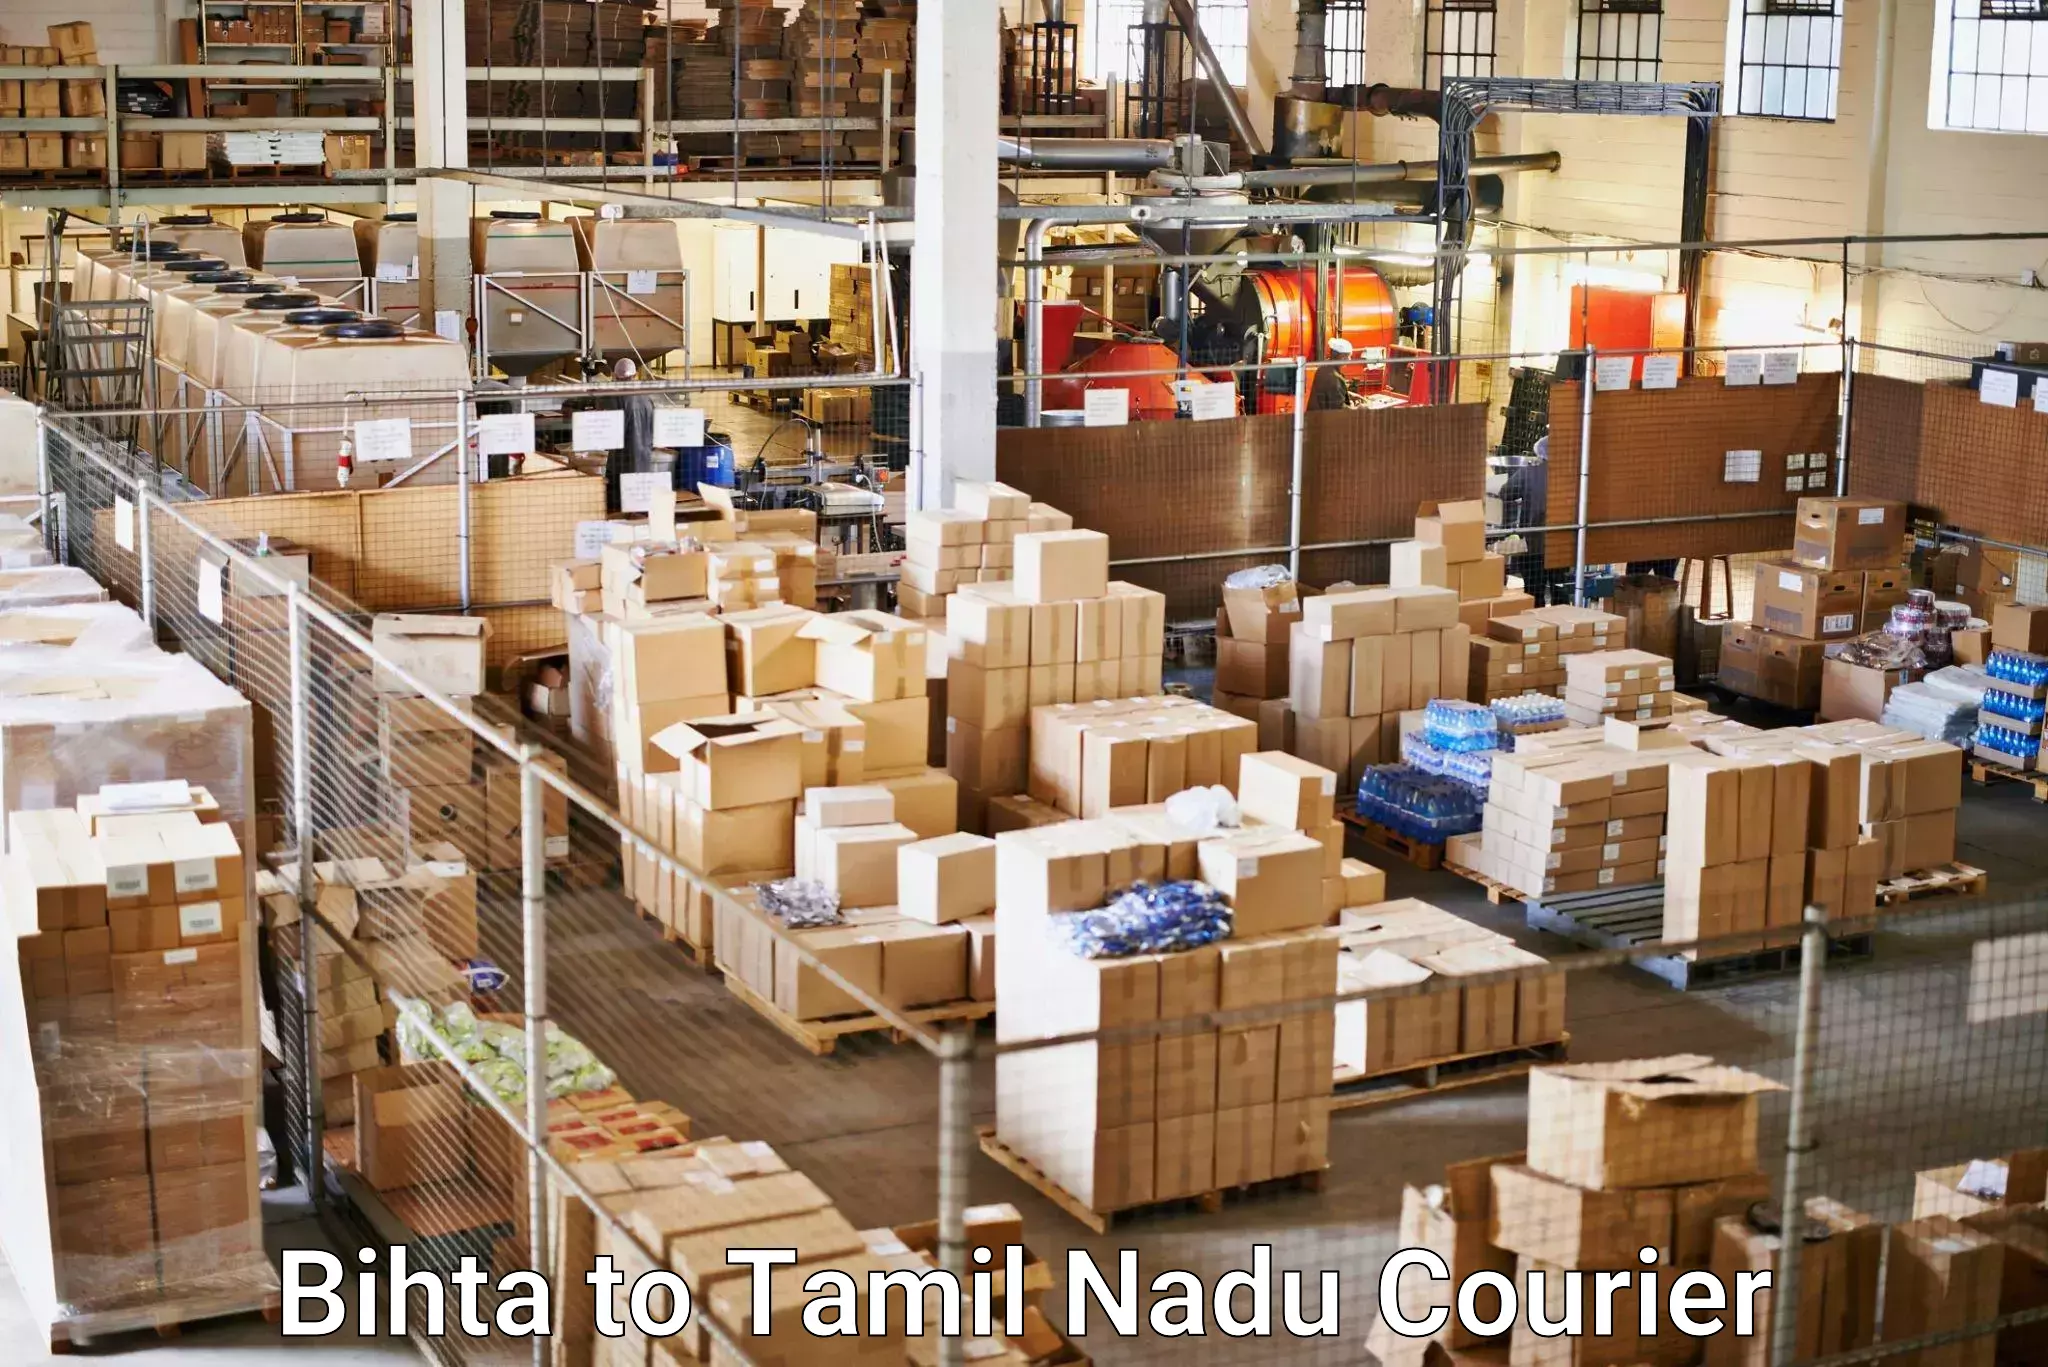 High-speed delivery Bihta to Tamil Nadu